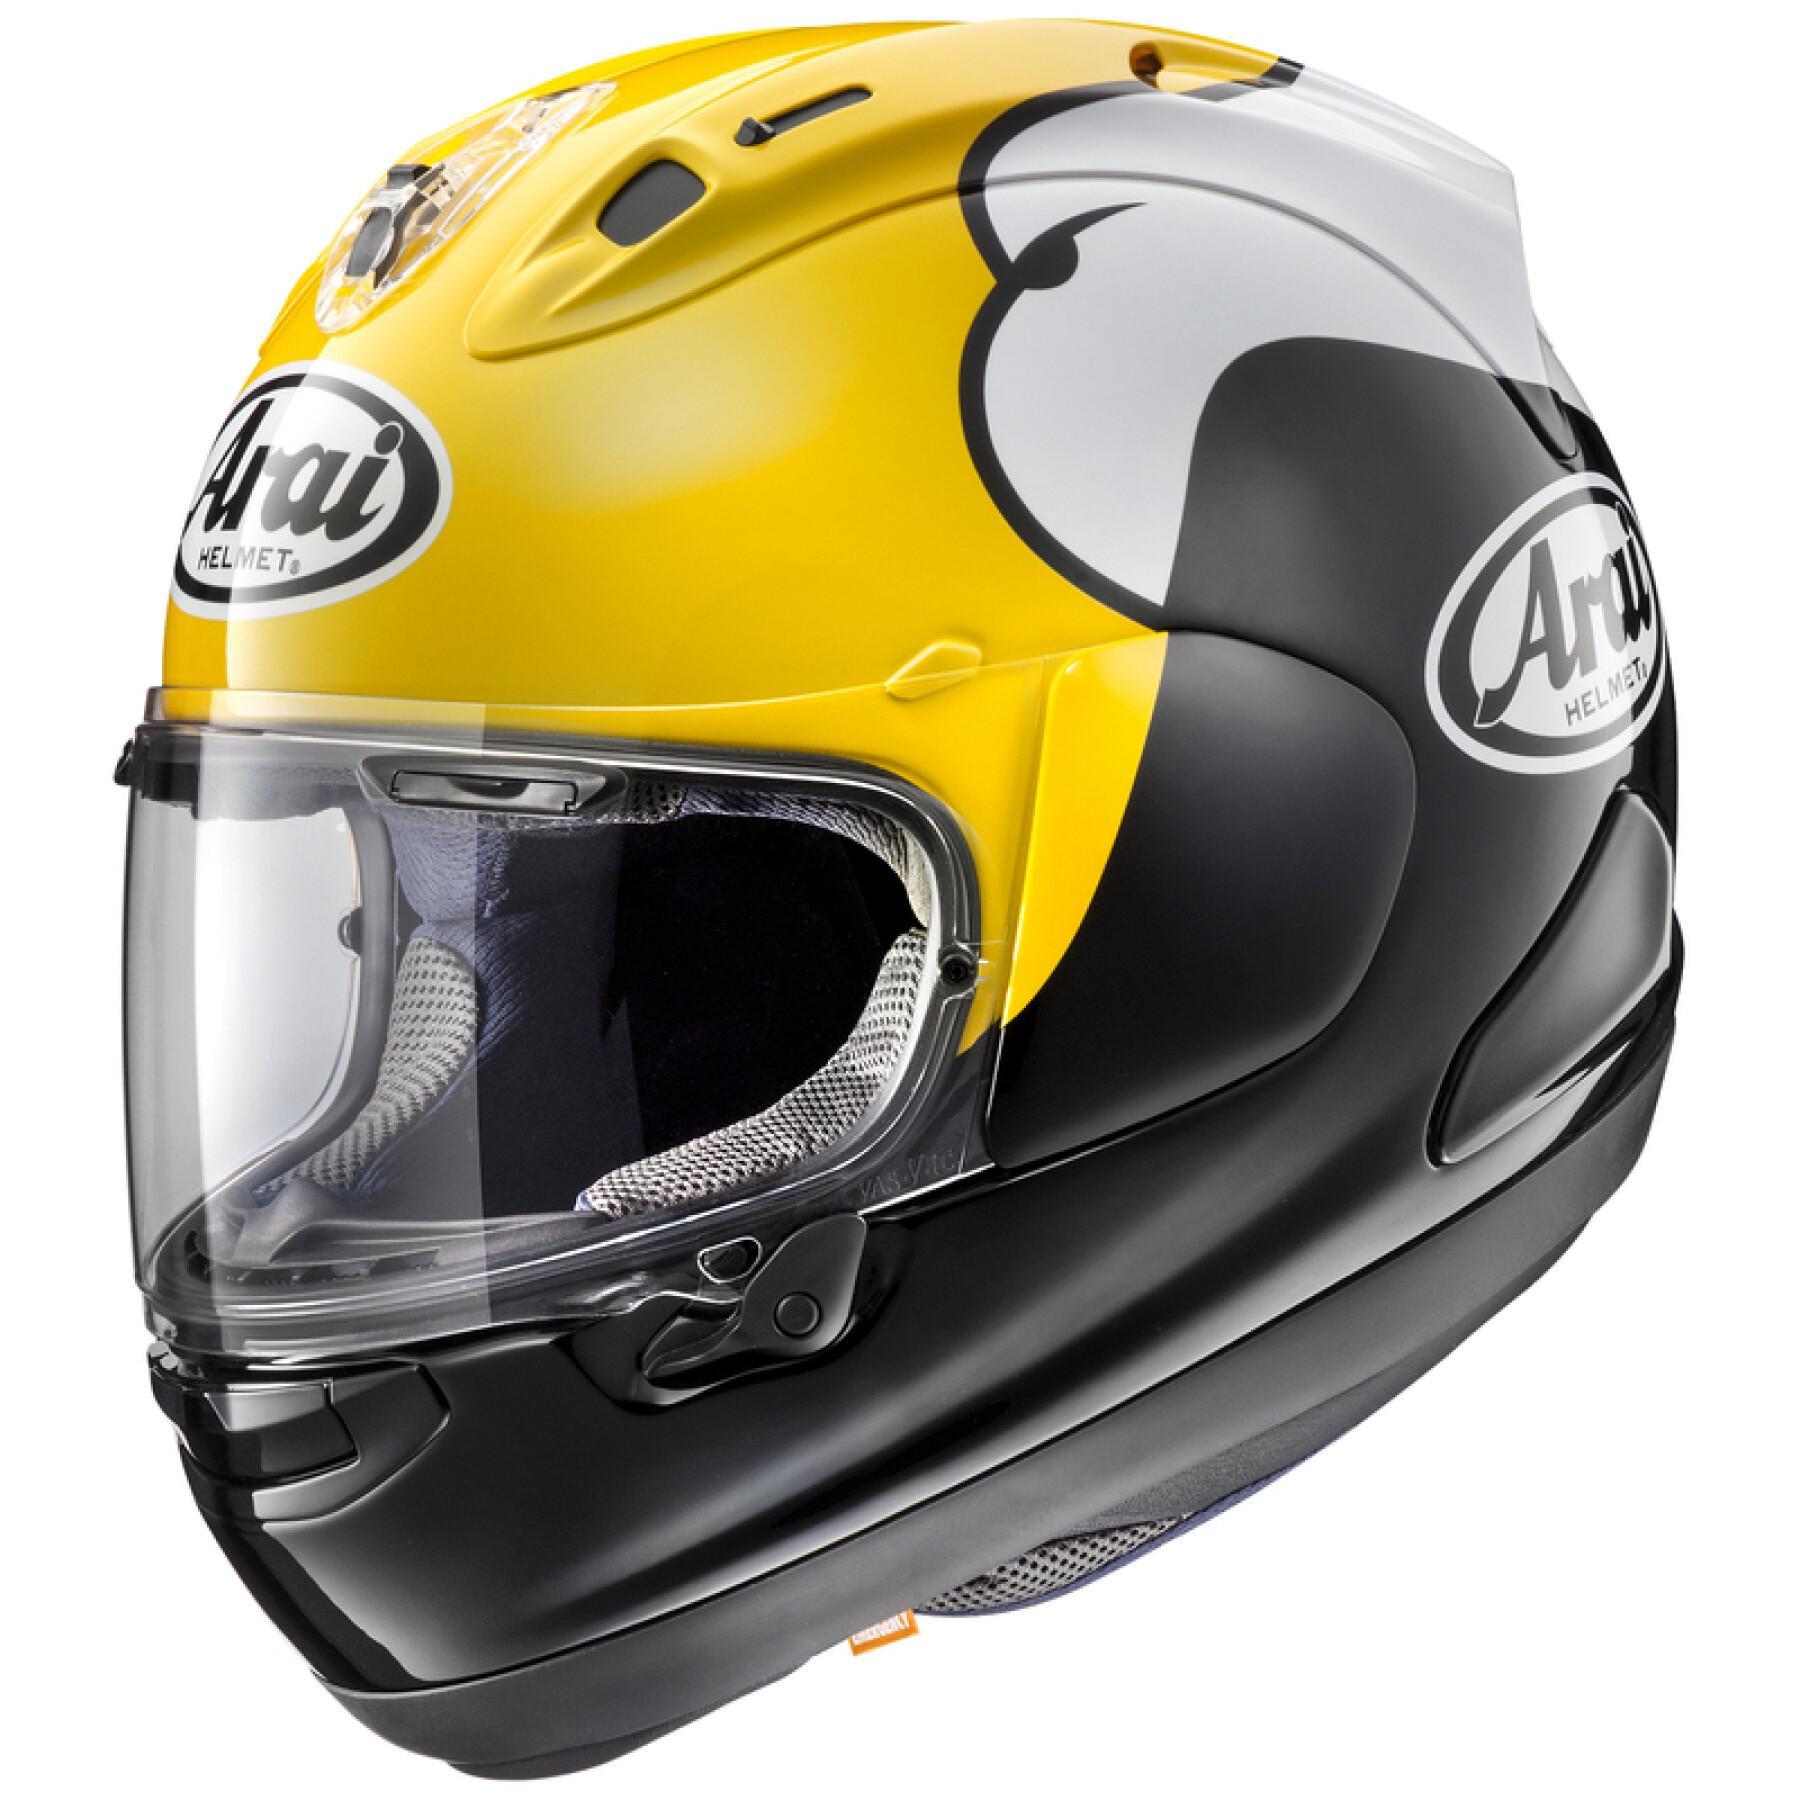 Full face motorcycle helmet Arai RX-7V - Kenny Roberts